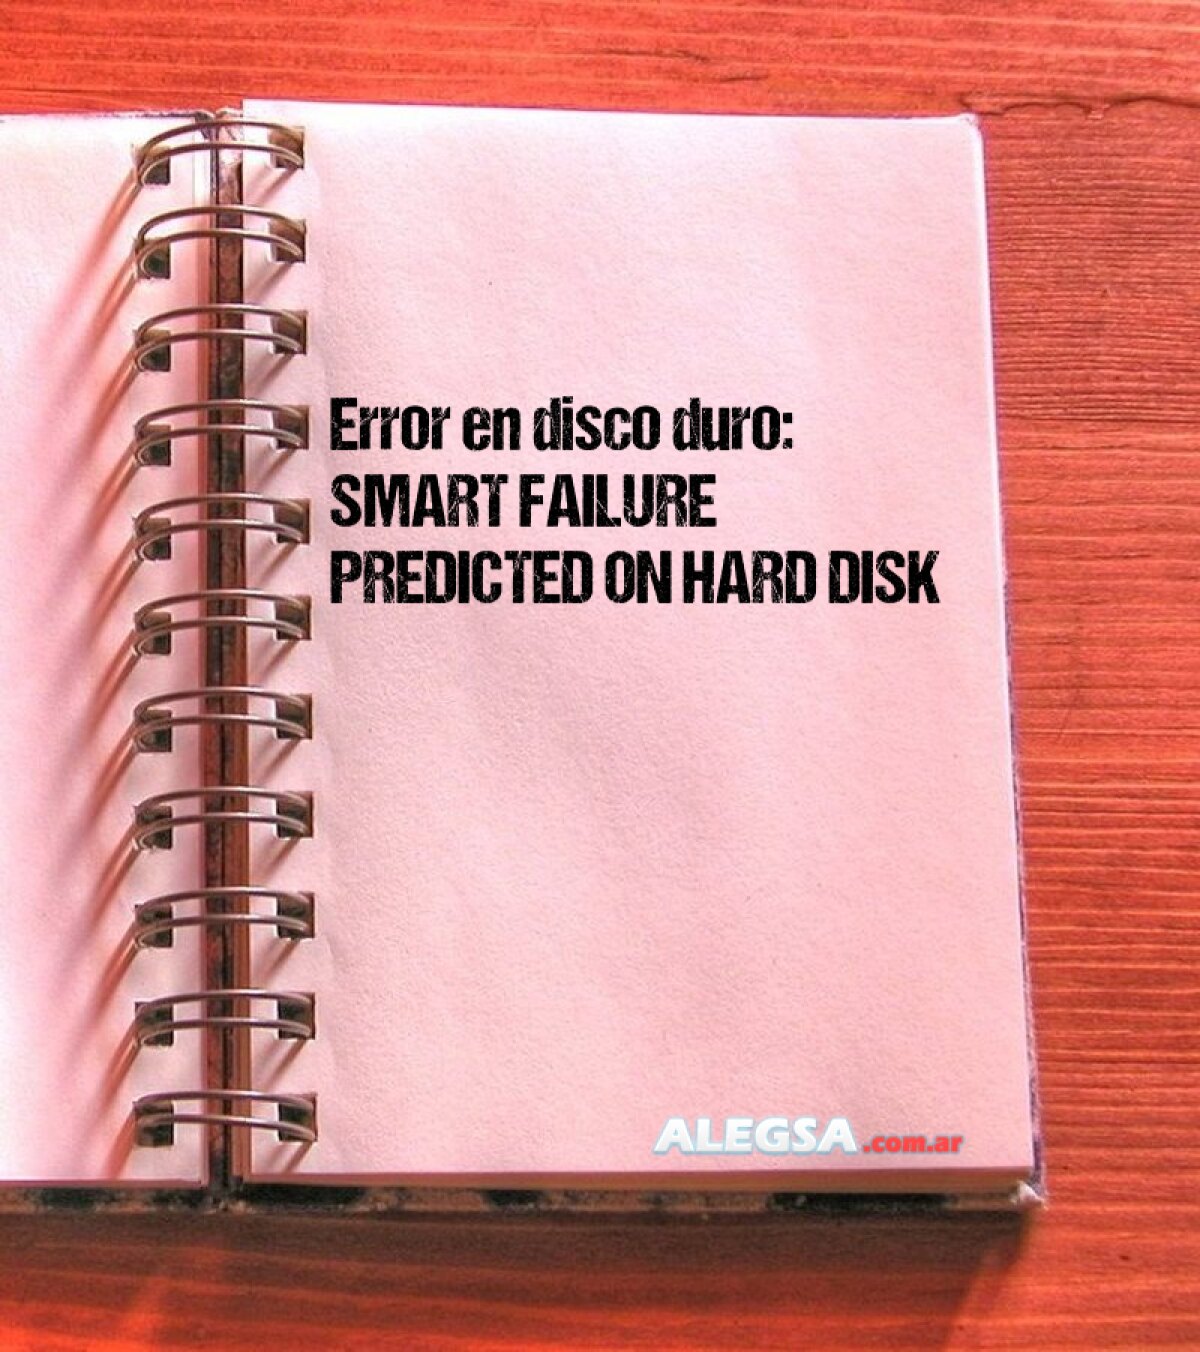 Error en disco duro: SMART FAILURE PREDICTED ON HARD DISK